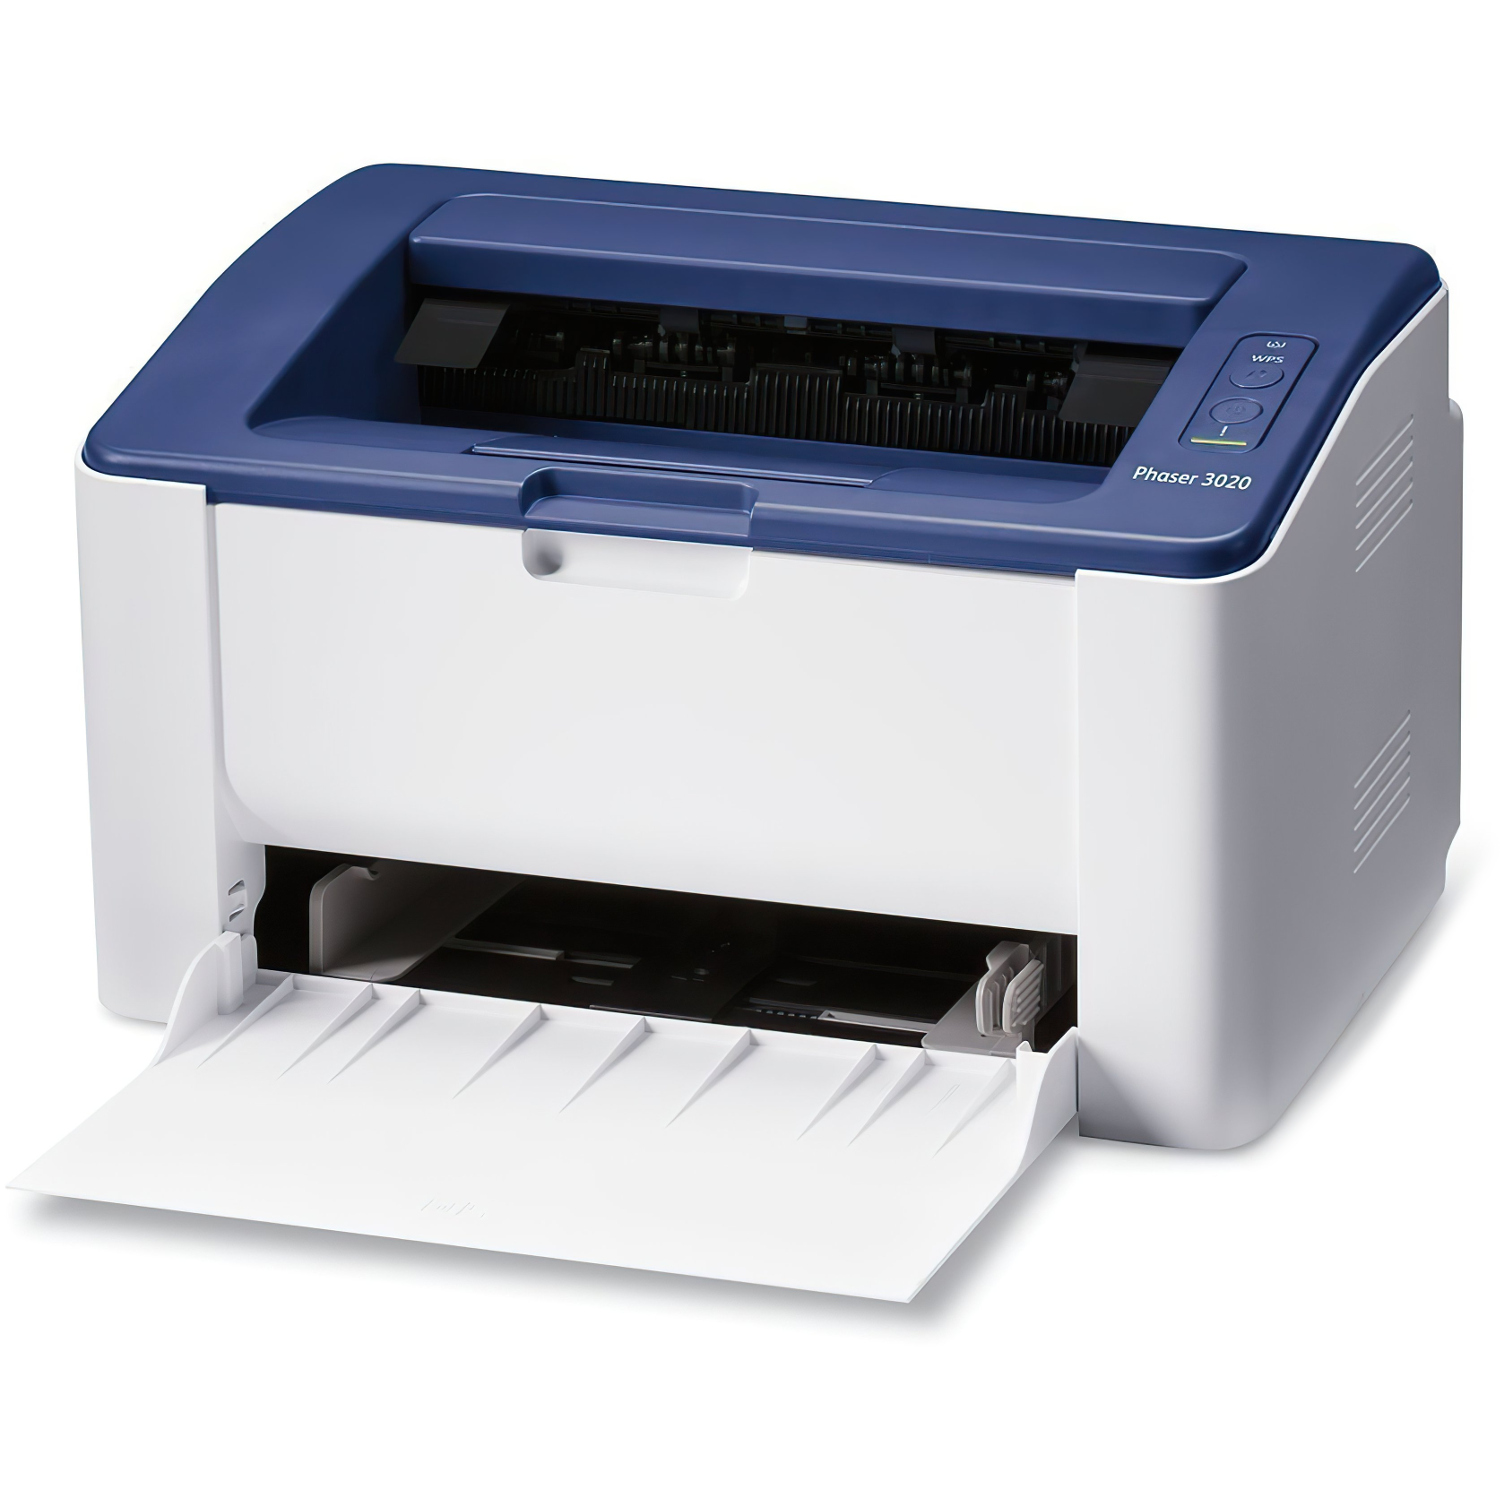 Недорогие принтеры для печати. Xerox Phaser 3020. Принтер Xerox Phaser 3020. Xerox 3020v_bi. Принтер Xerox Phaser 3052v.